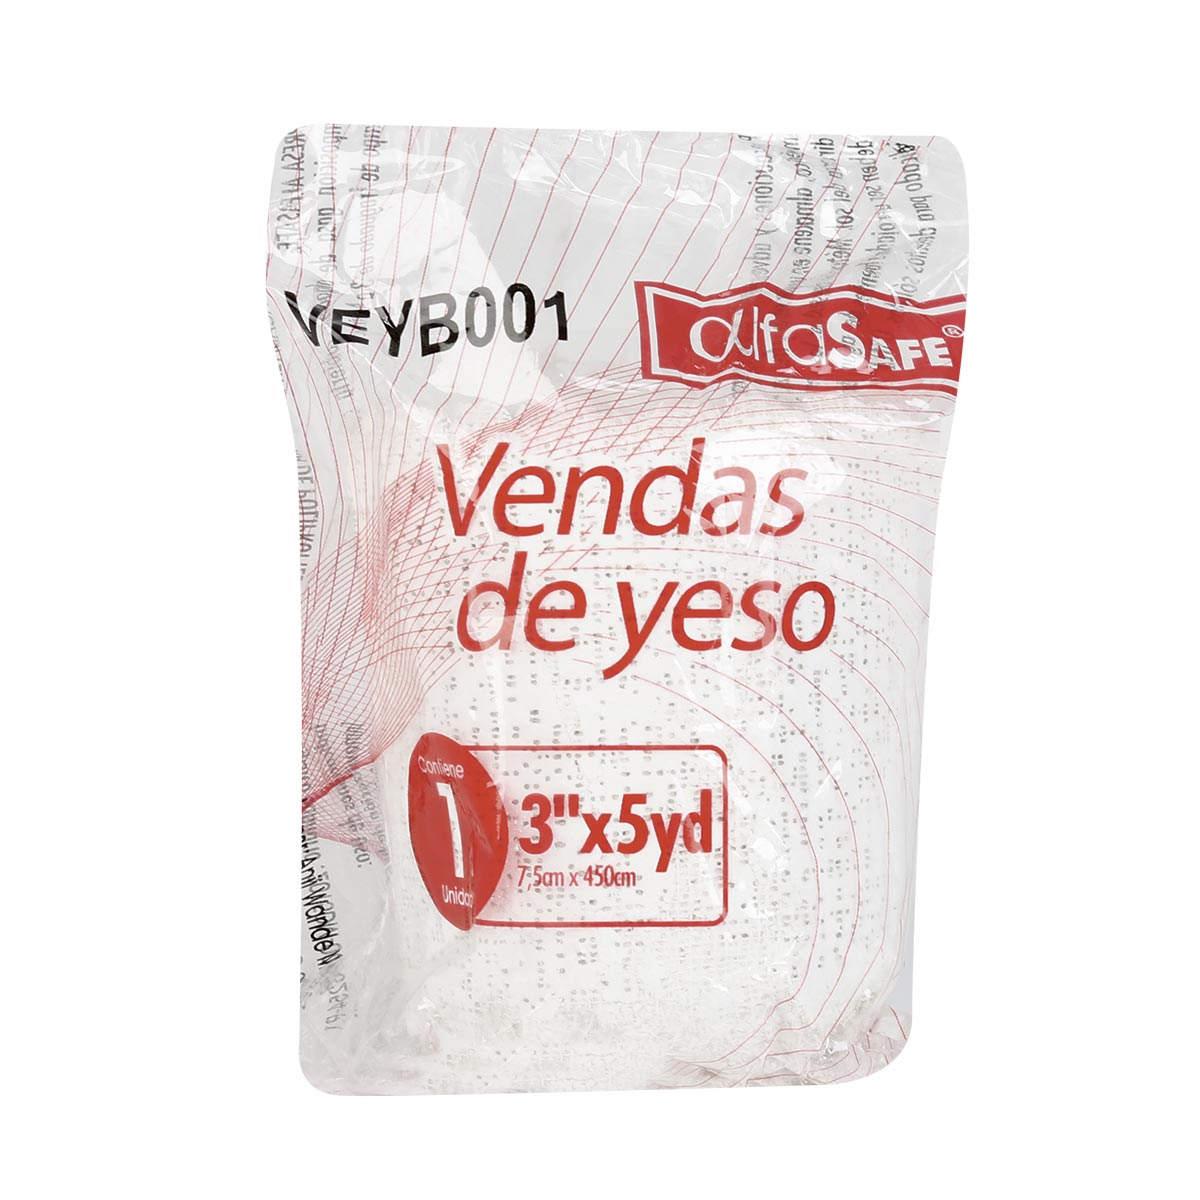 VENDA DE YESO DE 3 X 5 YARDAS - IMCOLMEDICA S.A